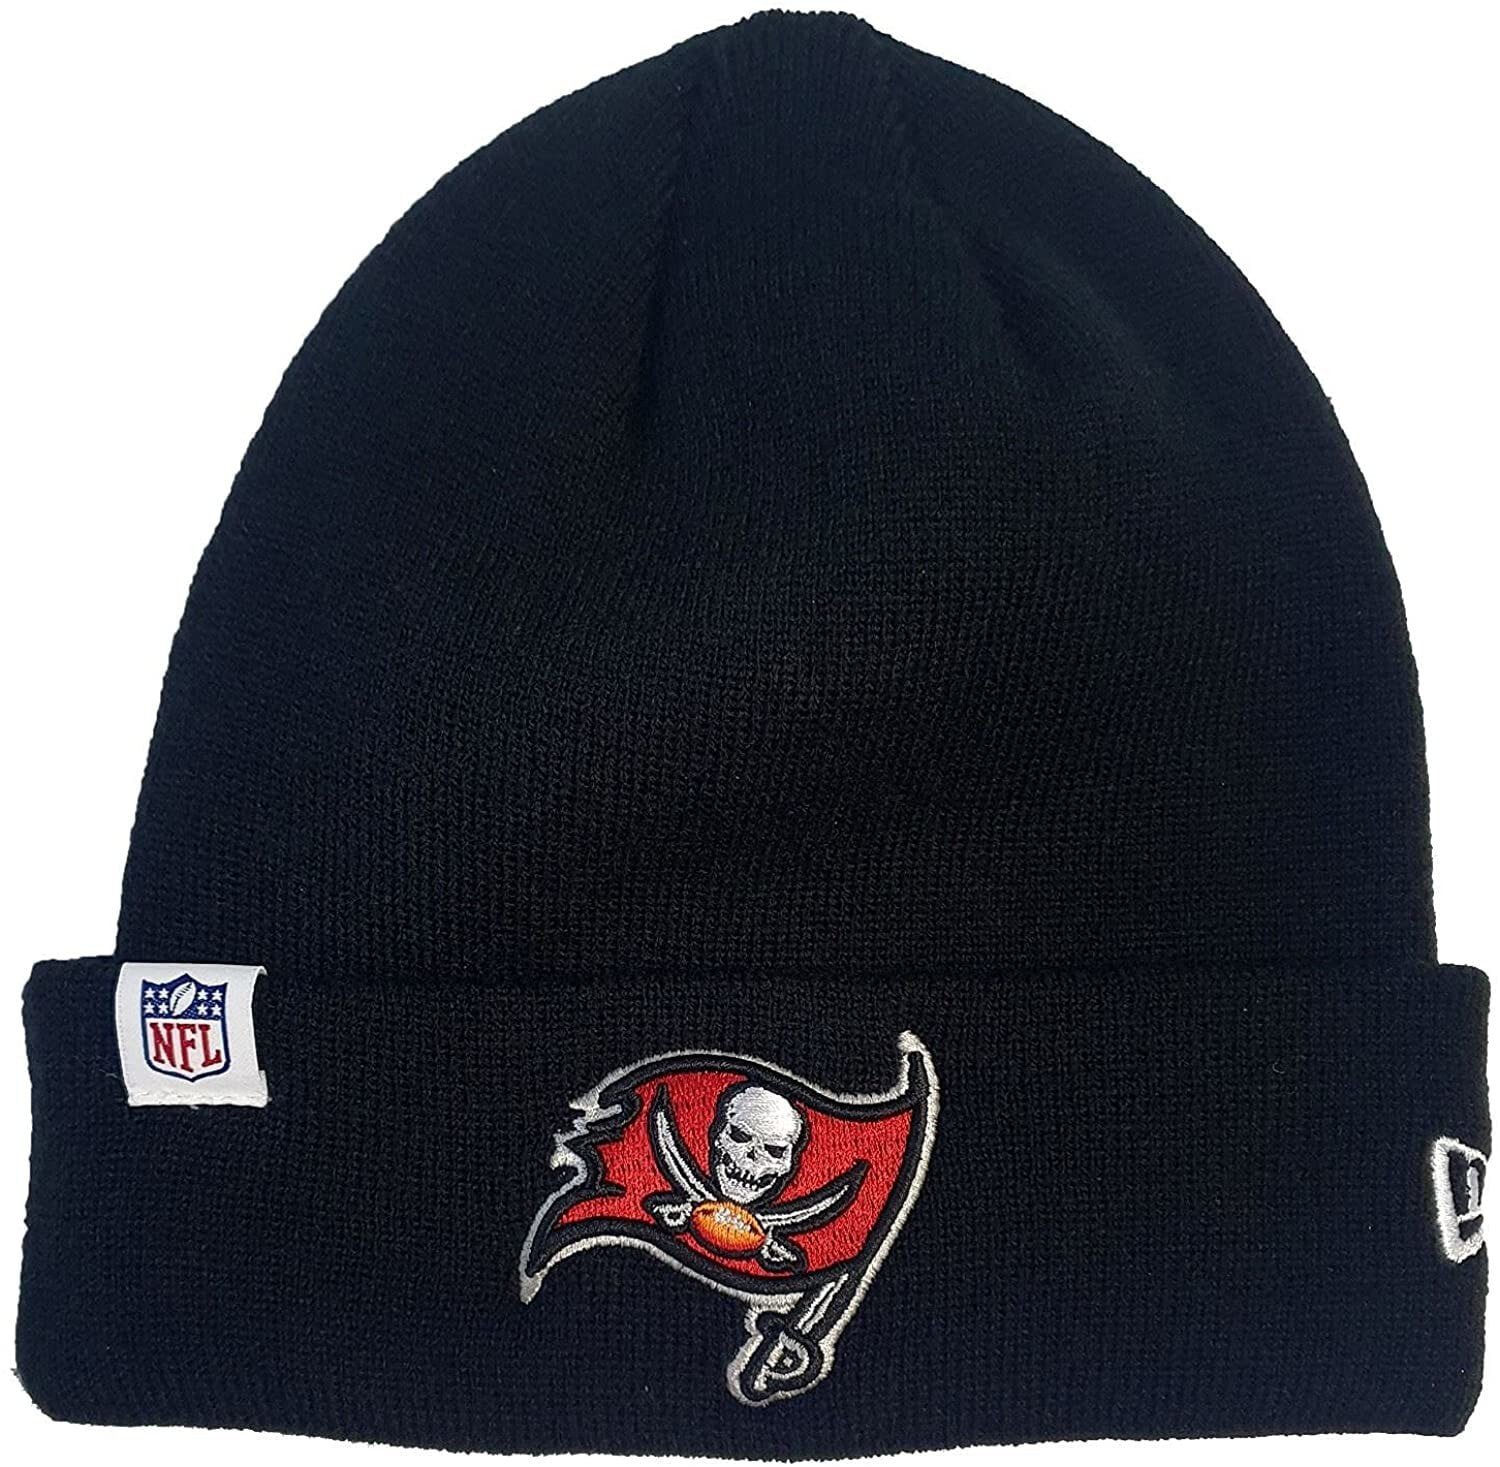 Мужская шапка черная трикотажная New Era NFL Beanie American Football Hat Winter Patriots Seahawks Raiders Chiefs 49ers Black